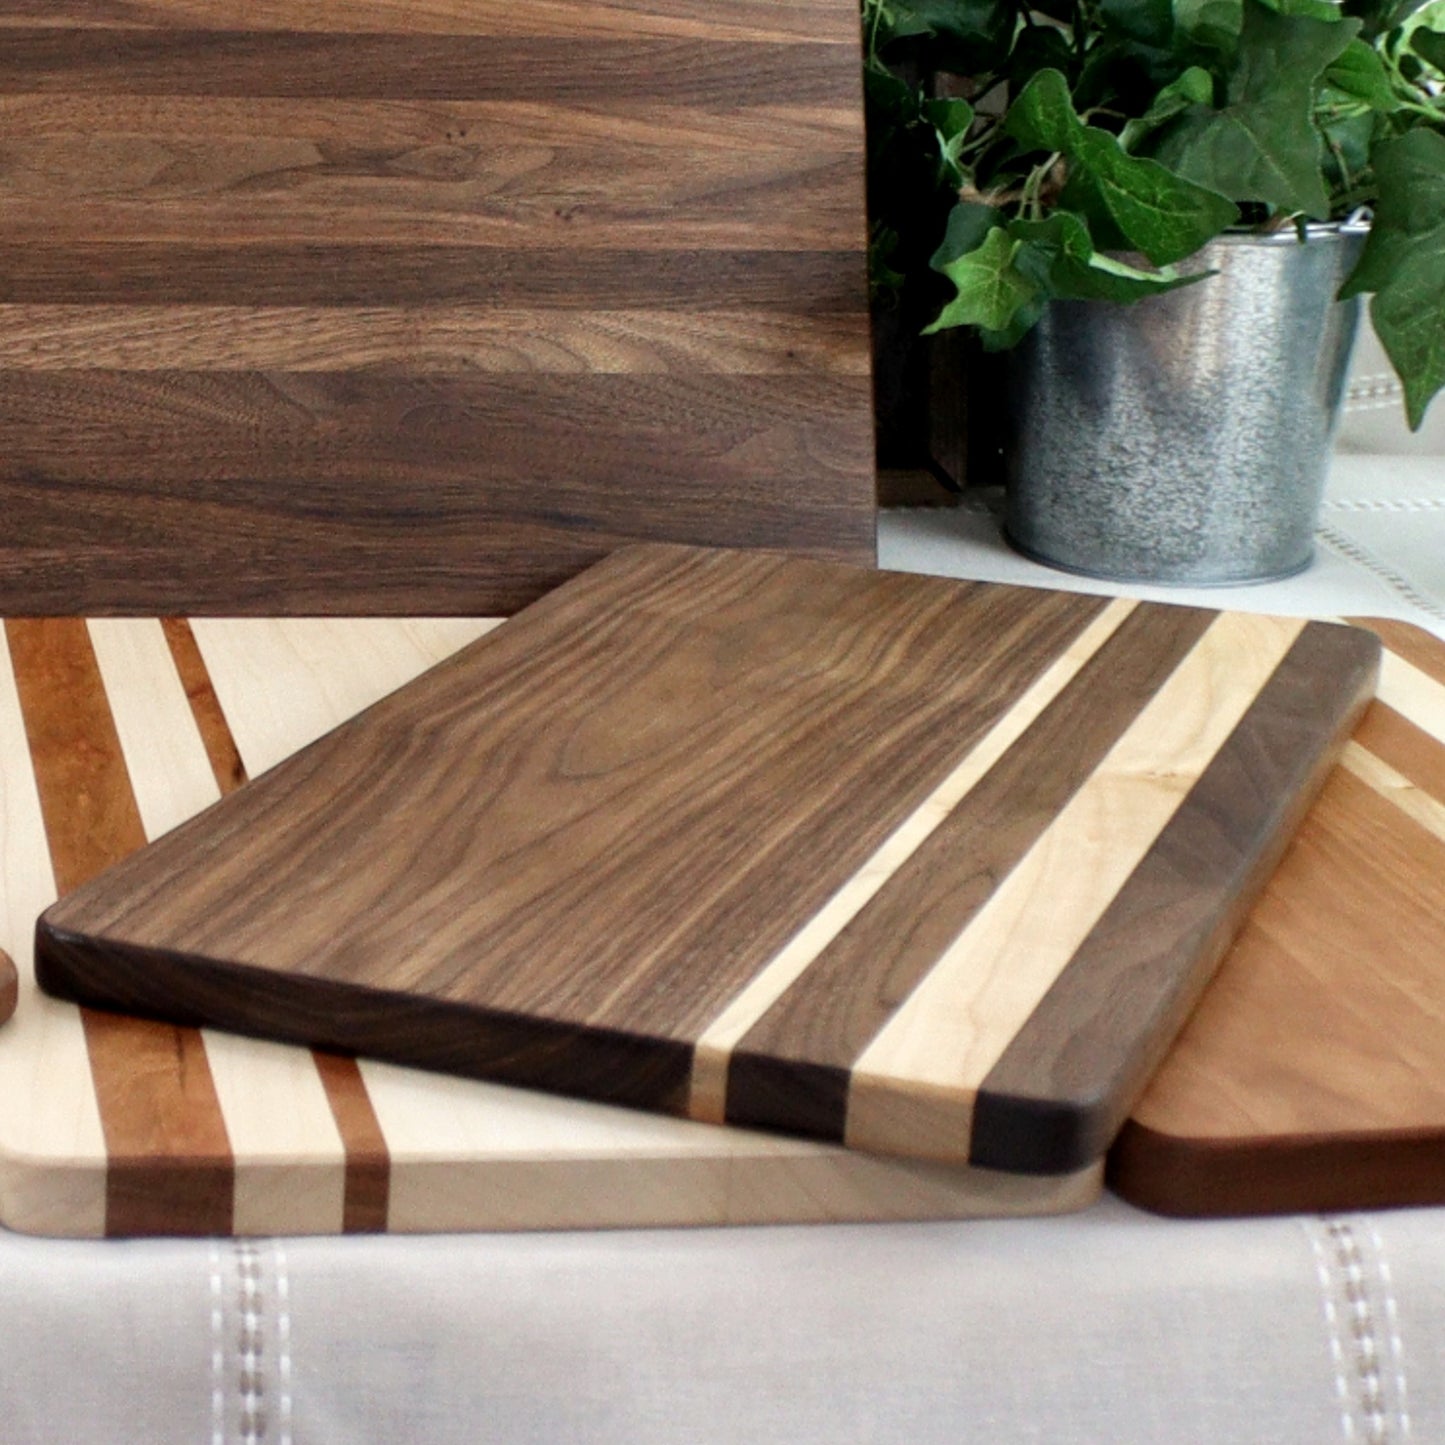 Walnut Cutting Board With Maple Inlay